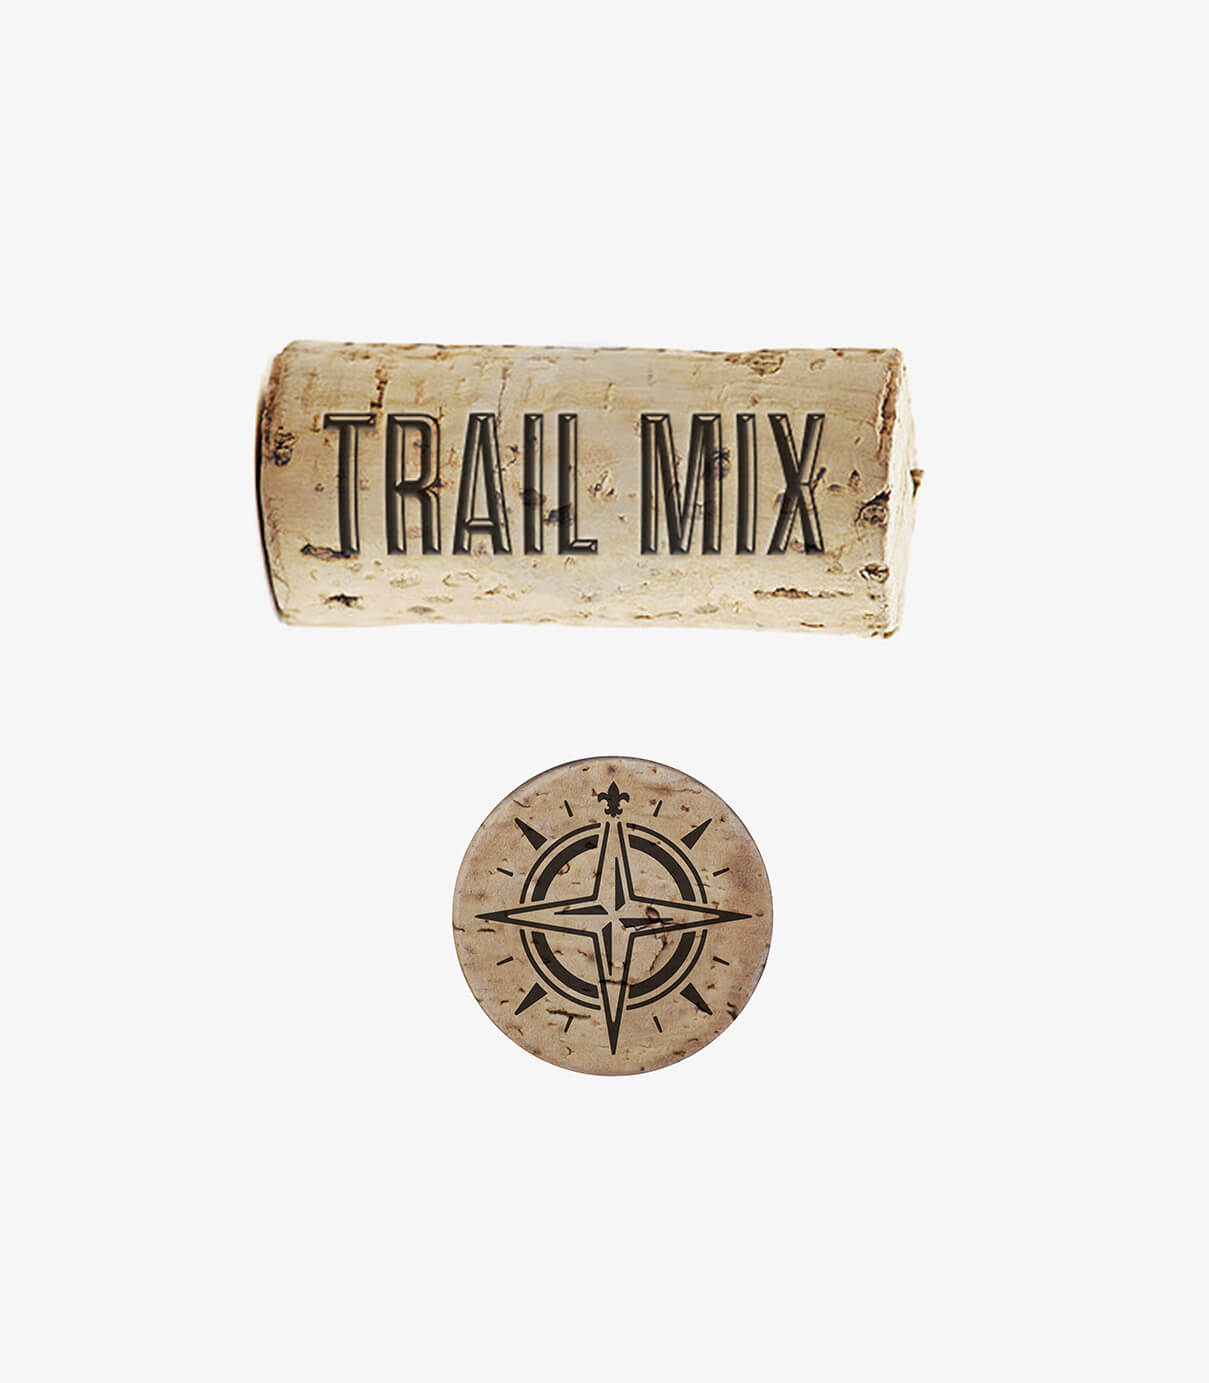 Design for Trail Mix Wine corks in Napa Valley, California